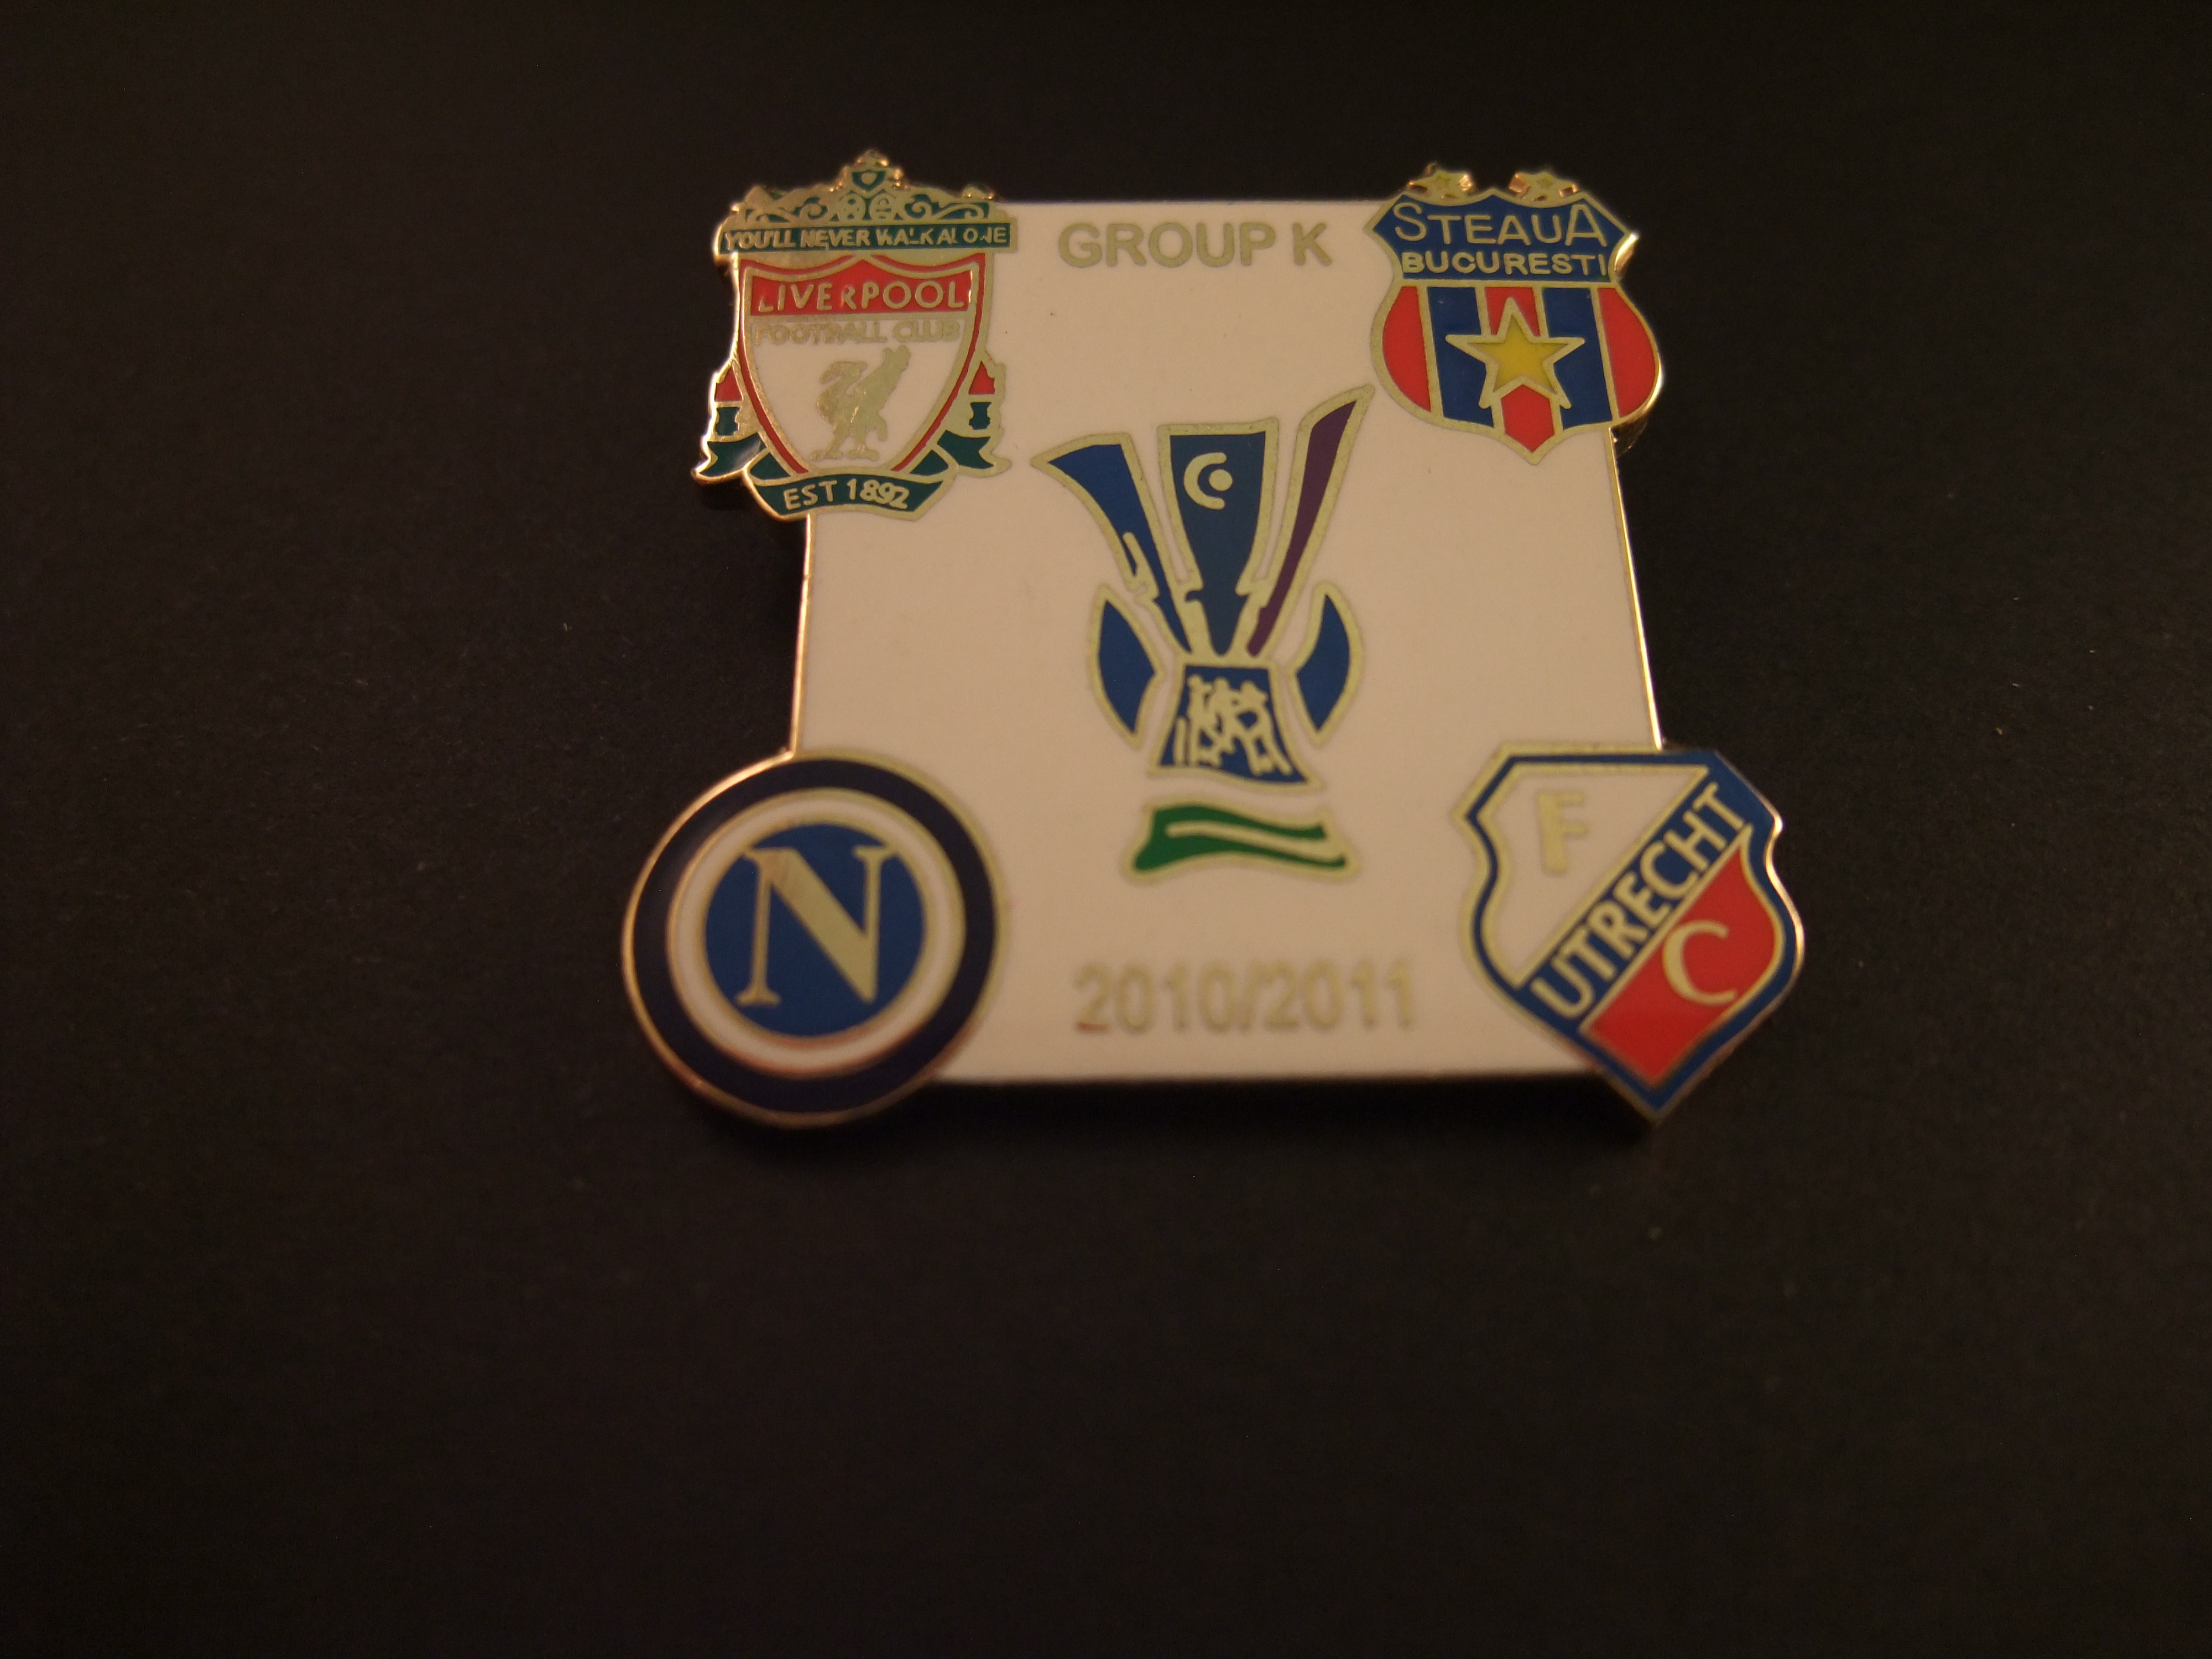 Europa League seizoen 2010-2011 Group K met Fc Utrecht , Liverpool, Steaua Boekarest,en Napoli